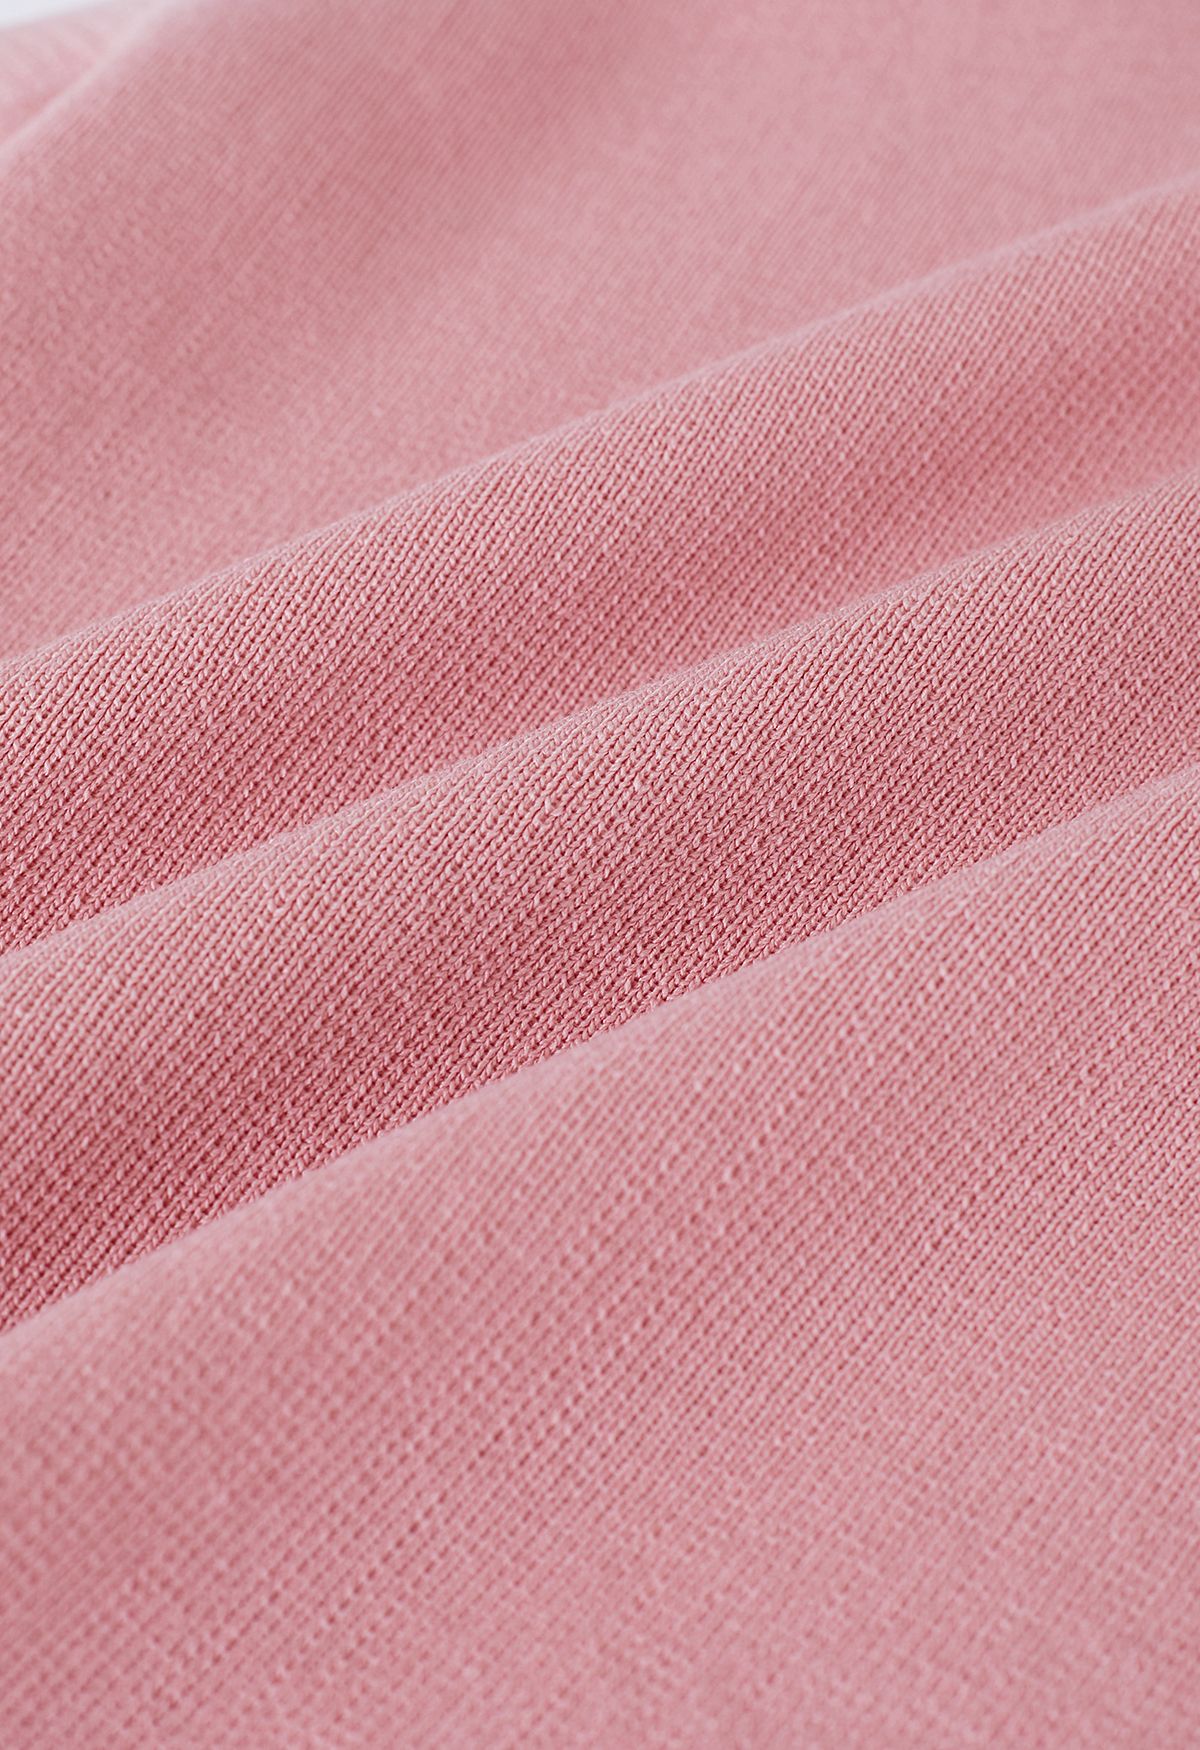 Asymmetric Halter Neck Knit Crop Top in Pink